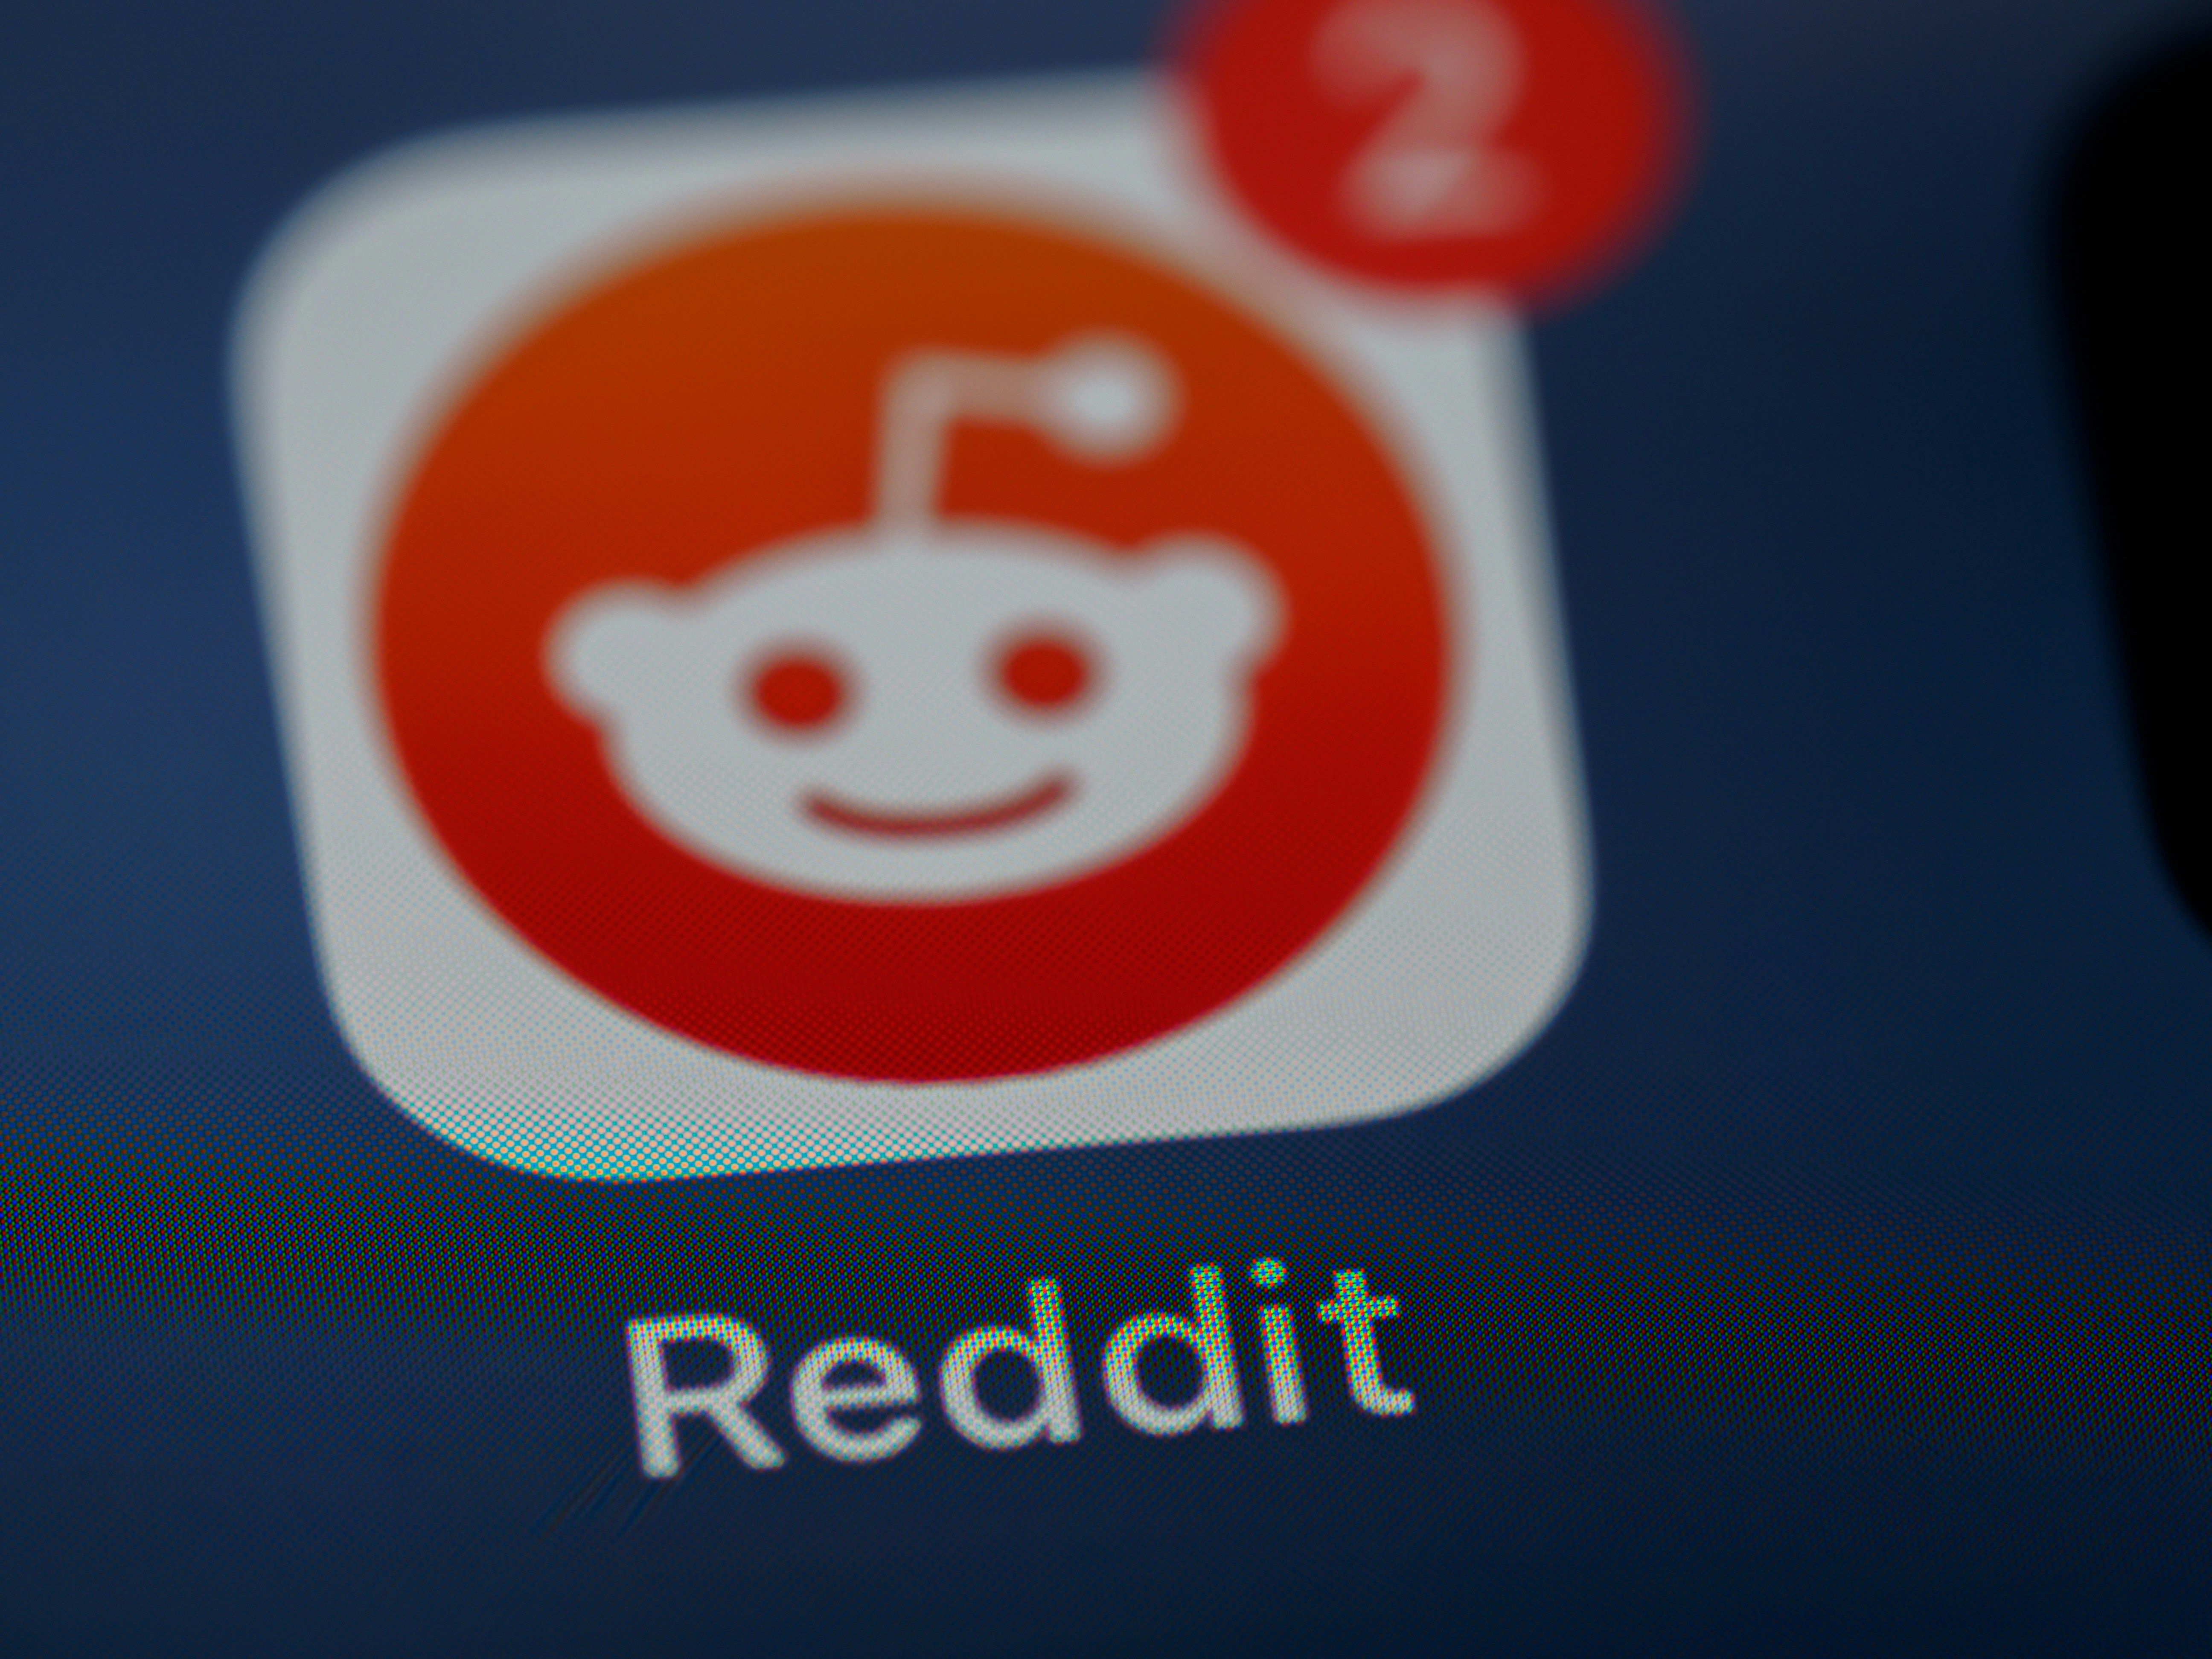 Reddit app visible inside a smartphone screen